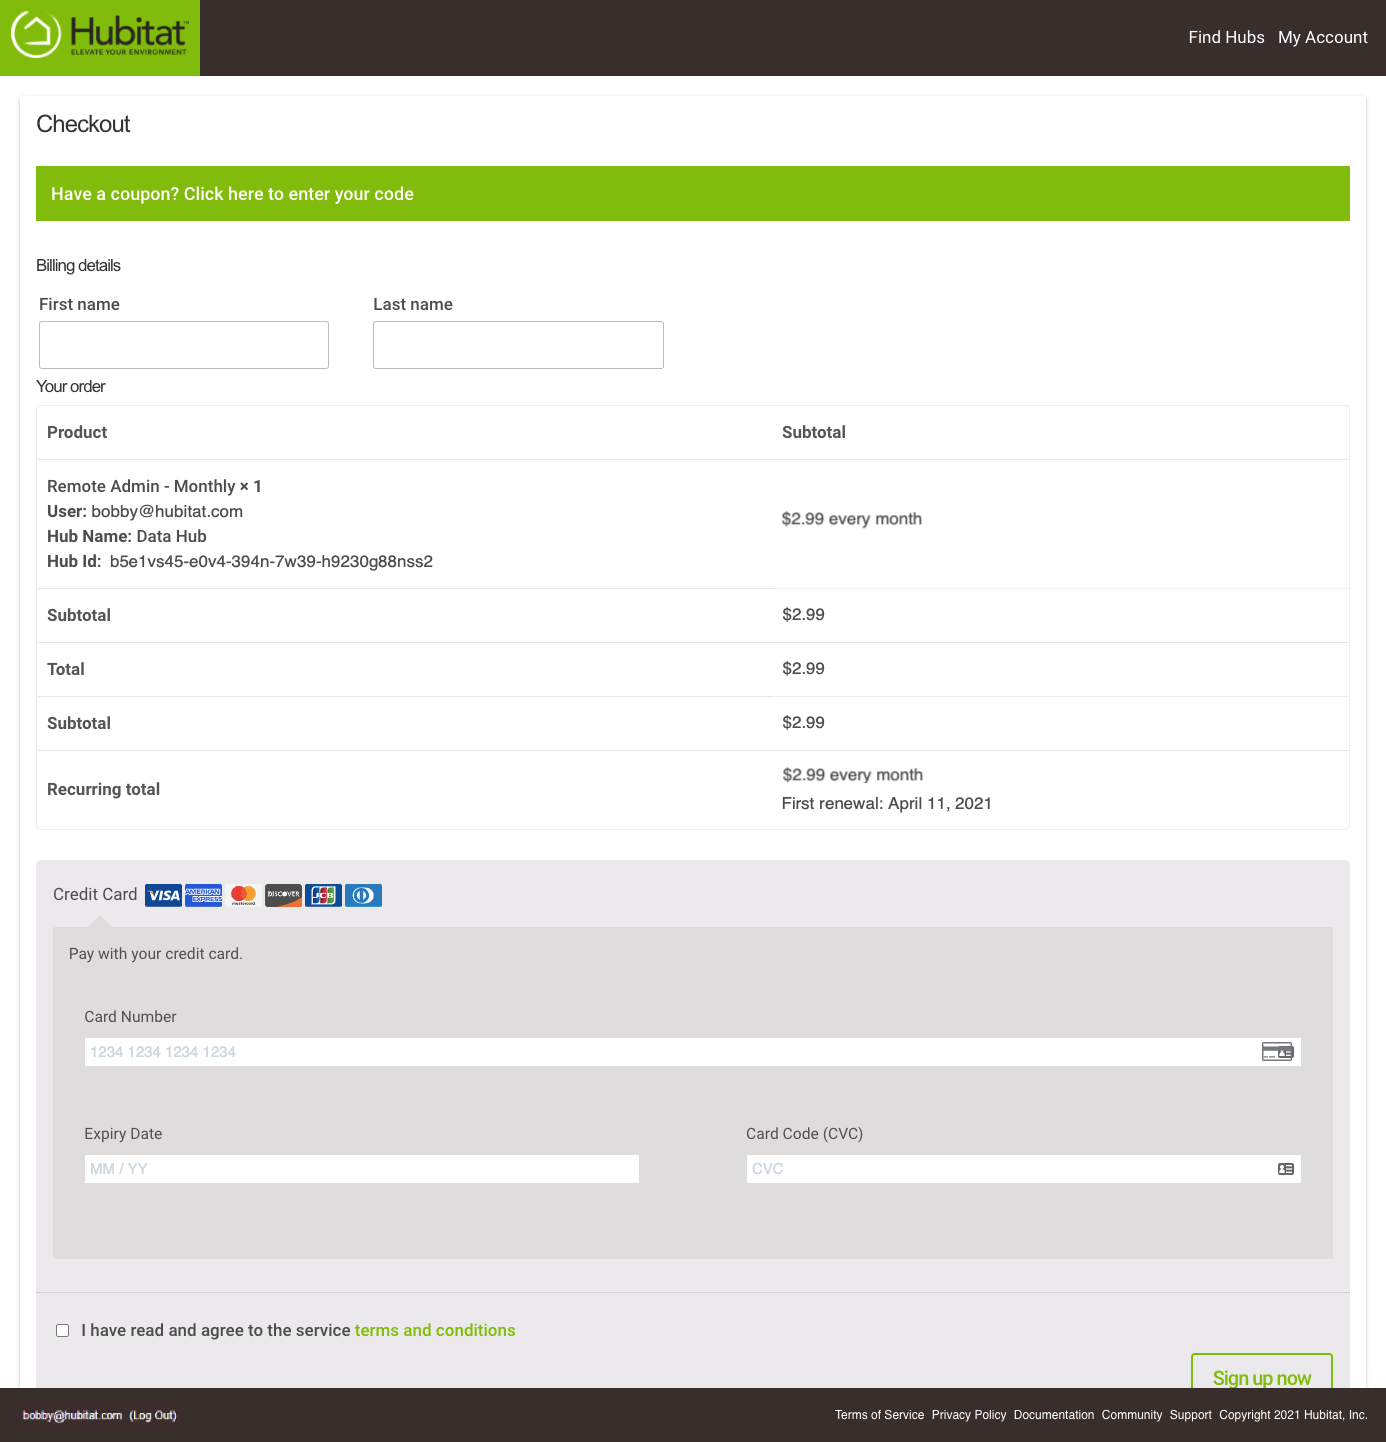 Screenshot: Remote admin signup info page